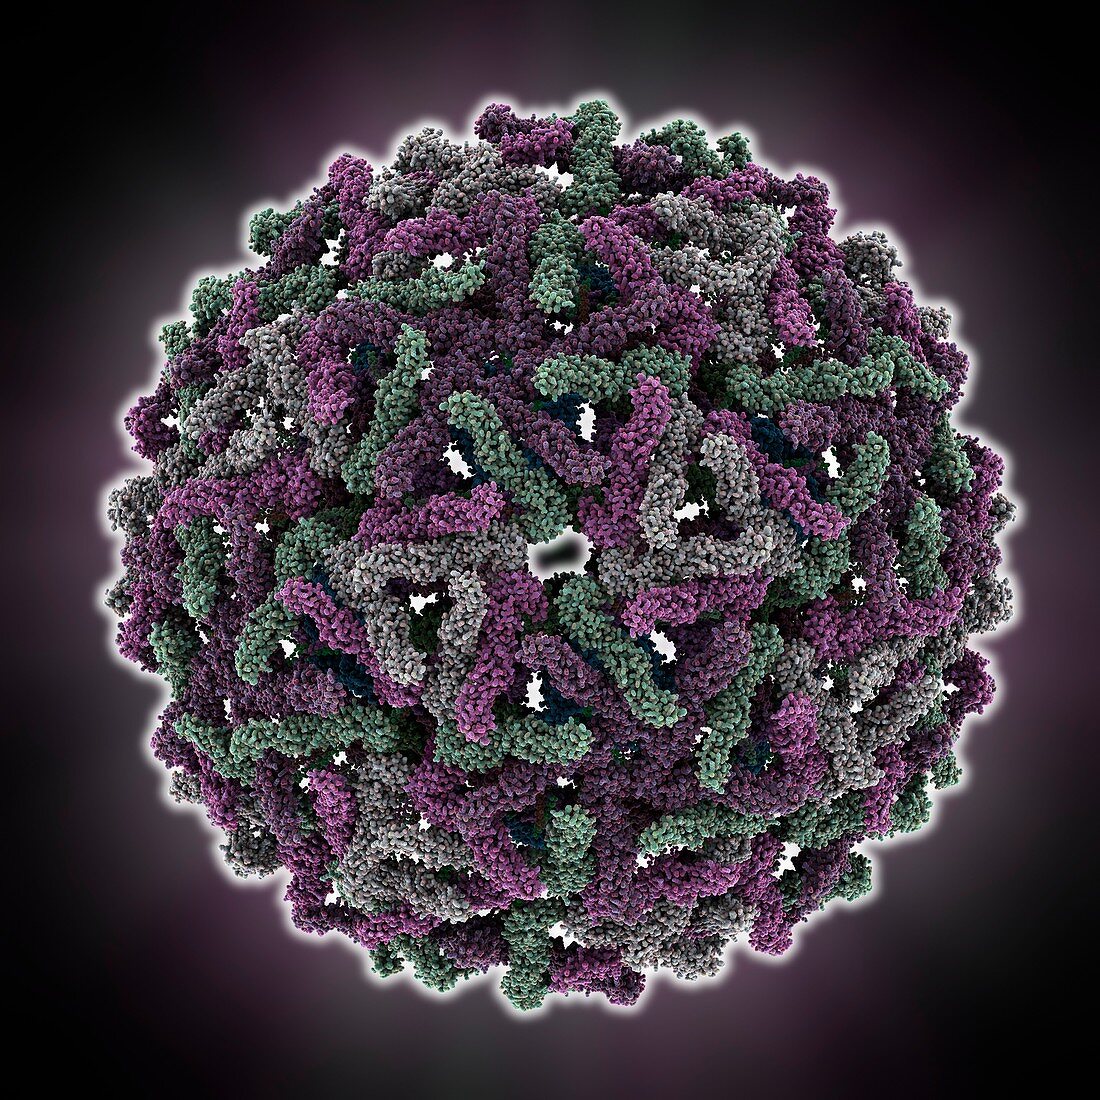 Dengue virus capsid,molecular model